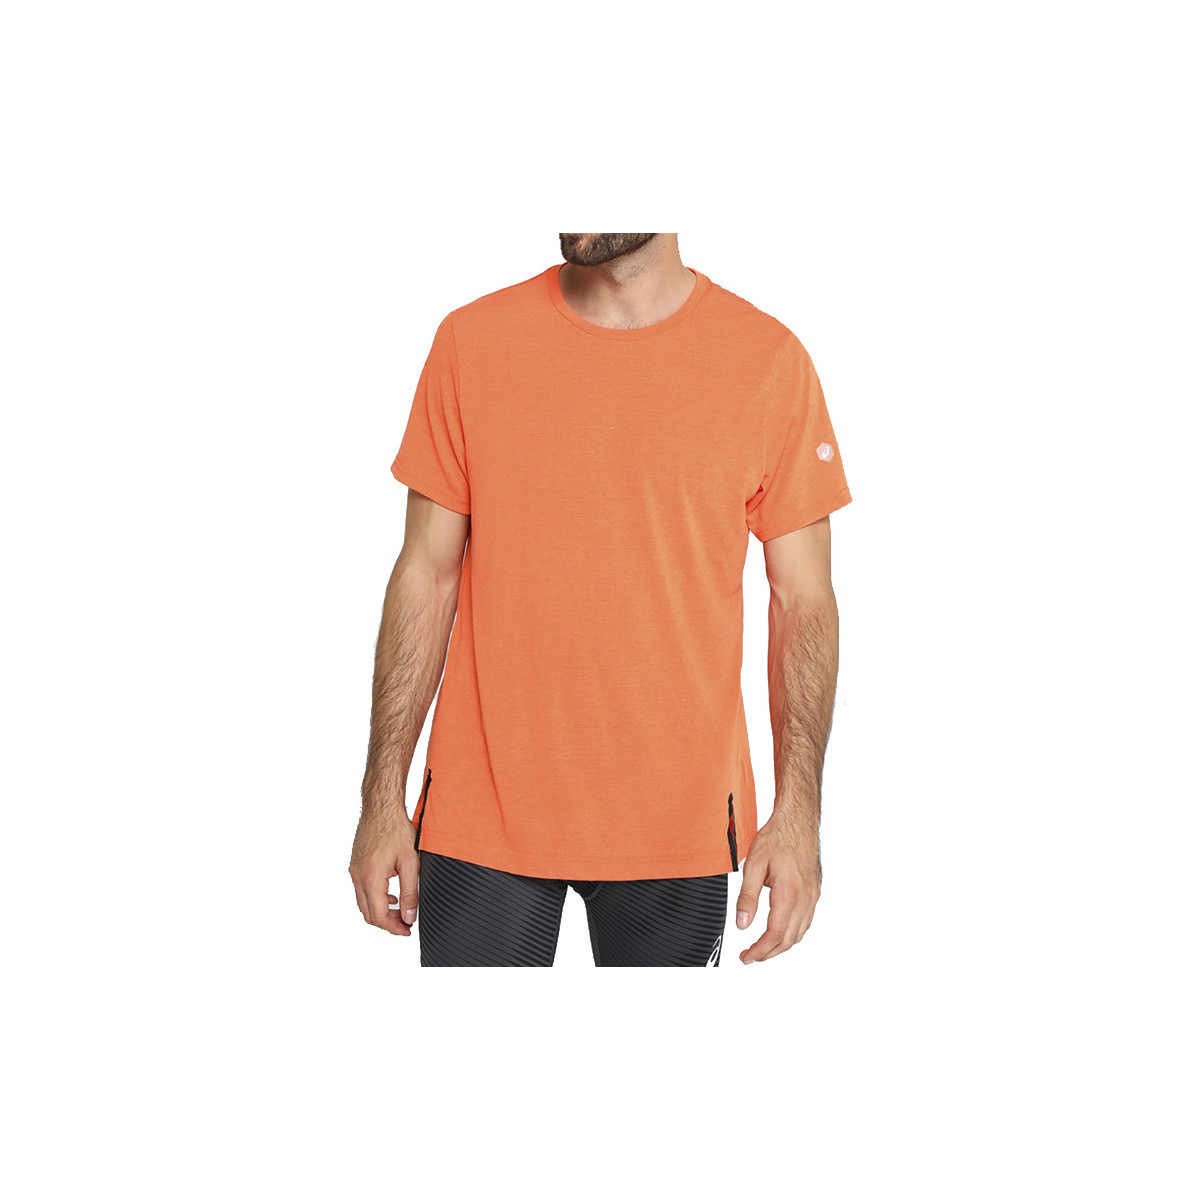 Textil Muži Trička s krátkým rukávem Asics Gel-Cool SS Top Tee Oranžová